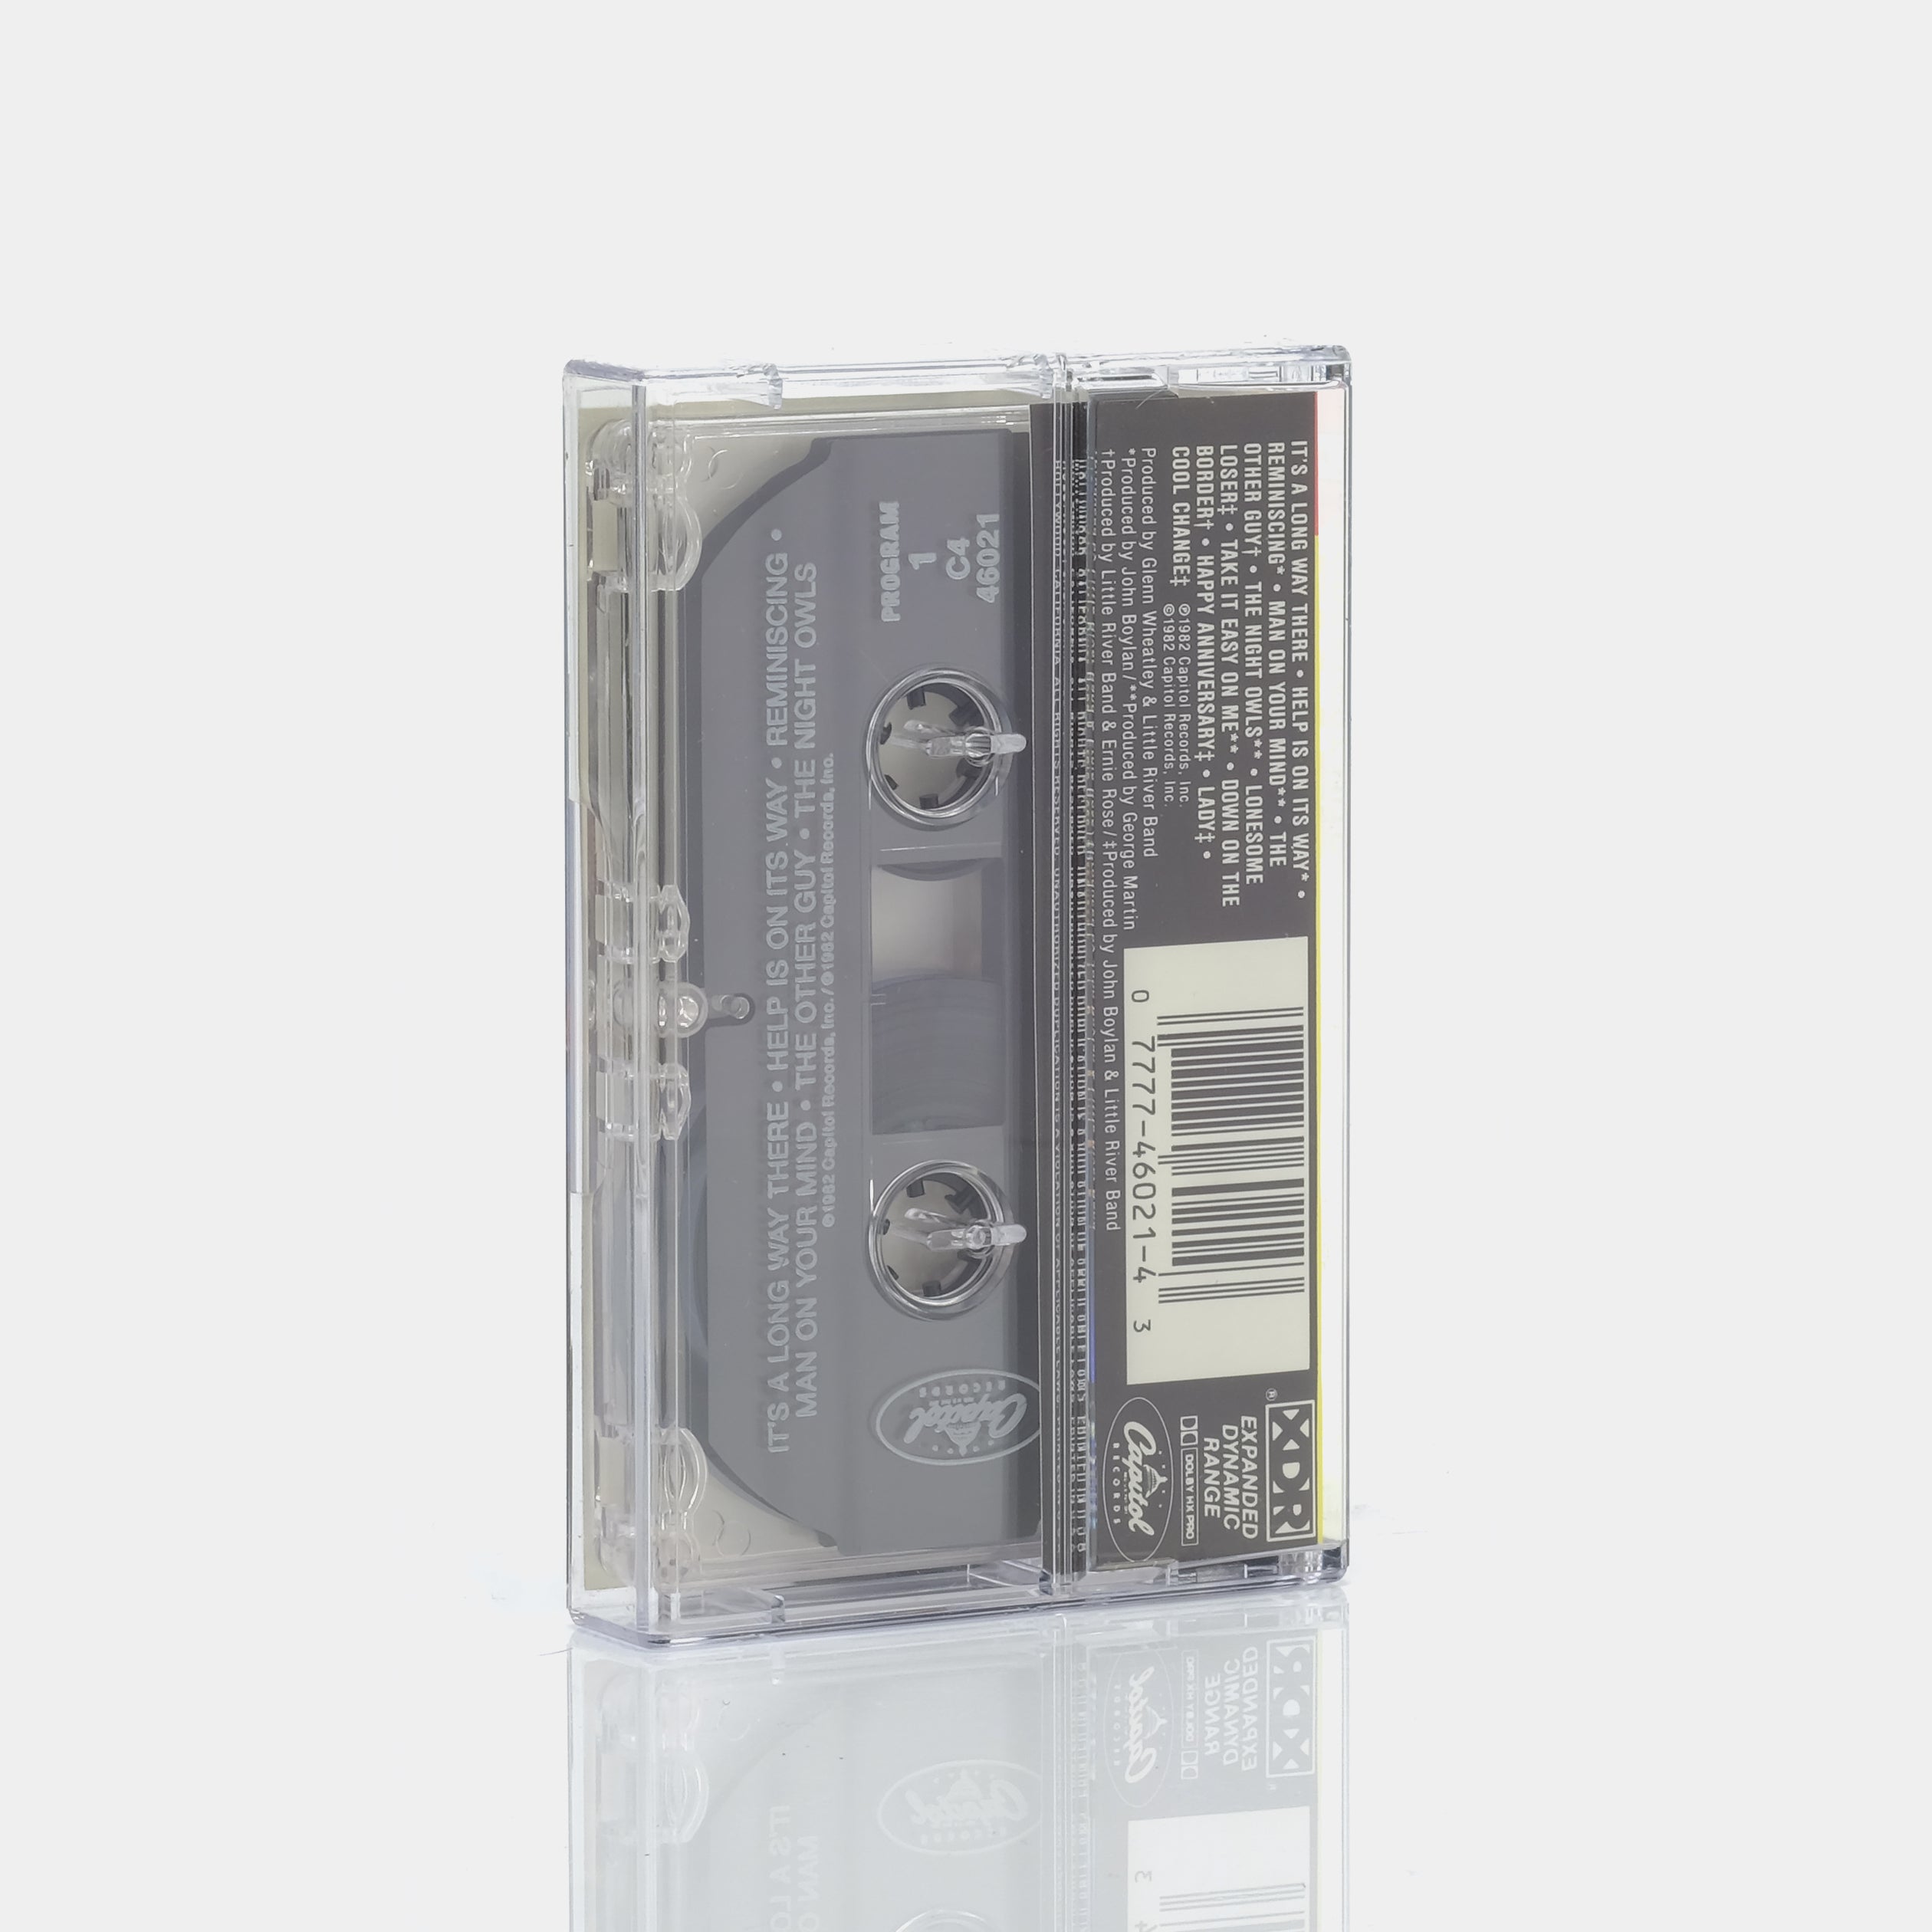 Little River Band - Greatest Hits Cassette Tape